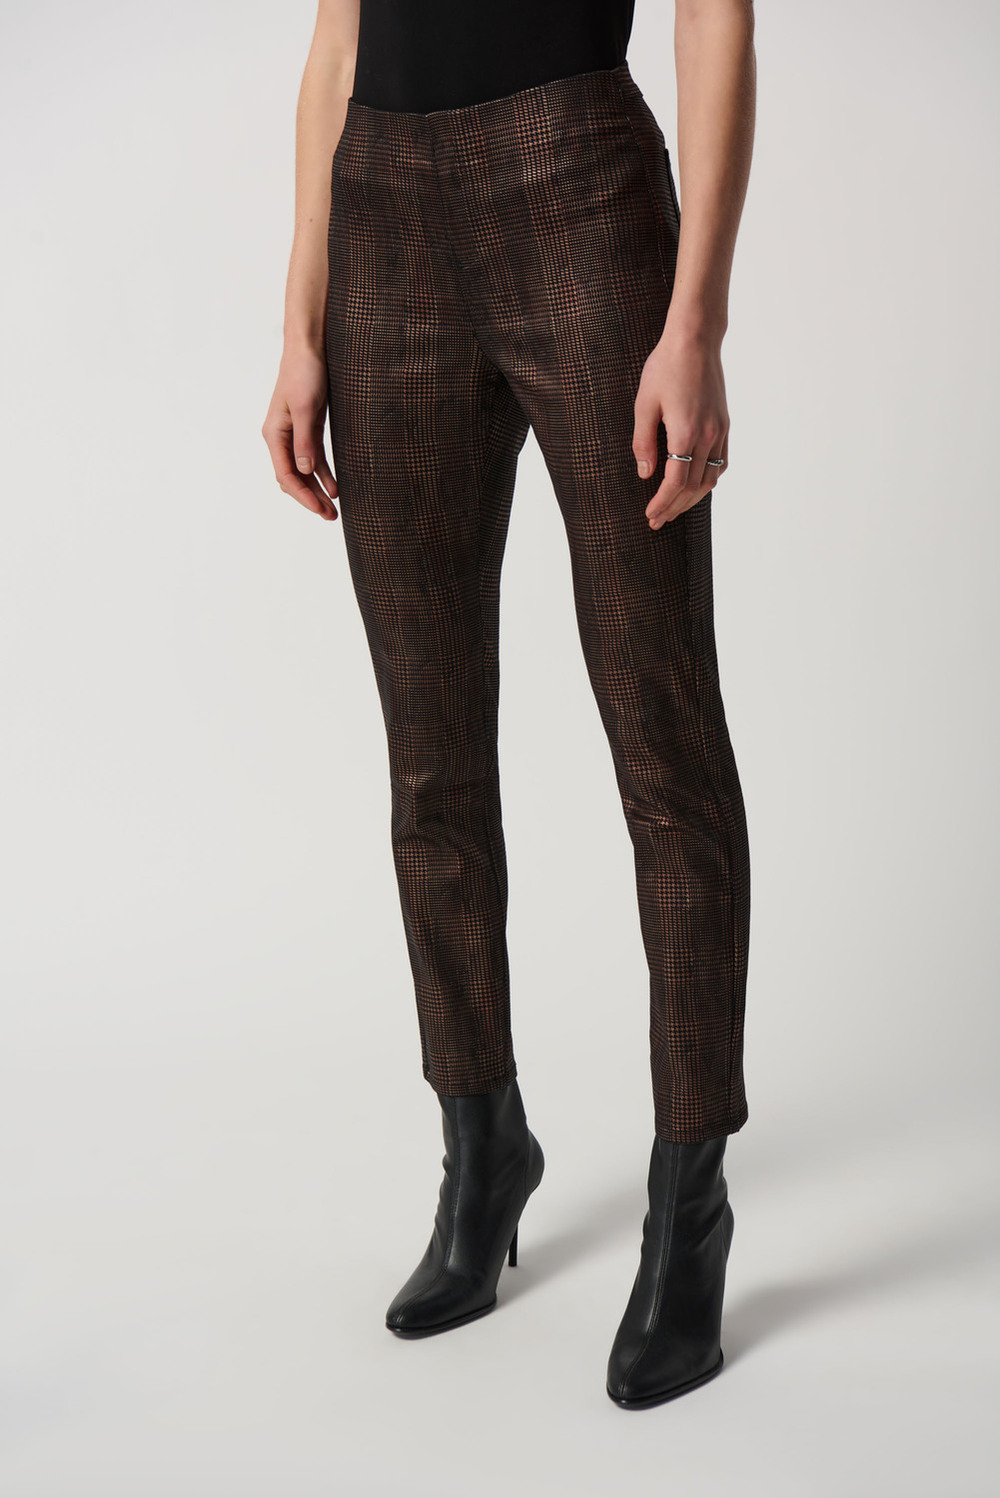 Pantalon slim modèle 234925. Black/bronze